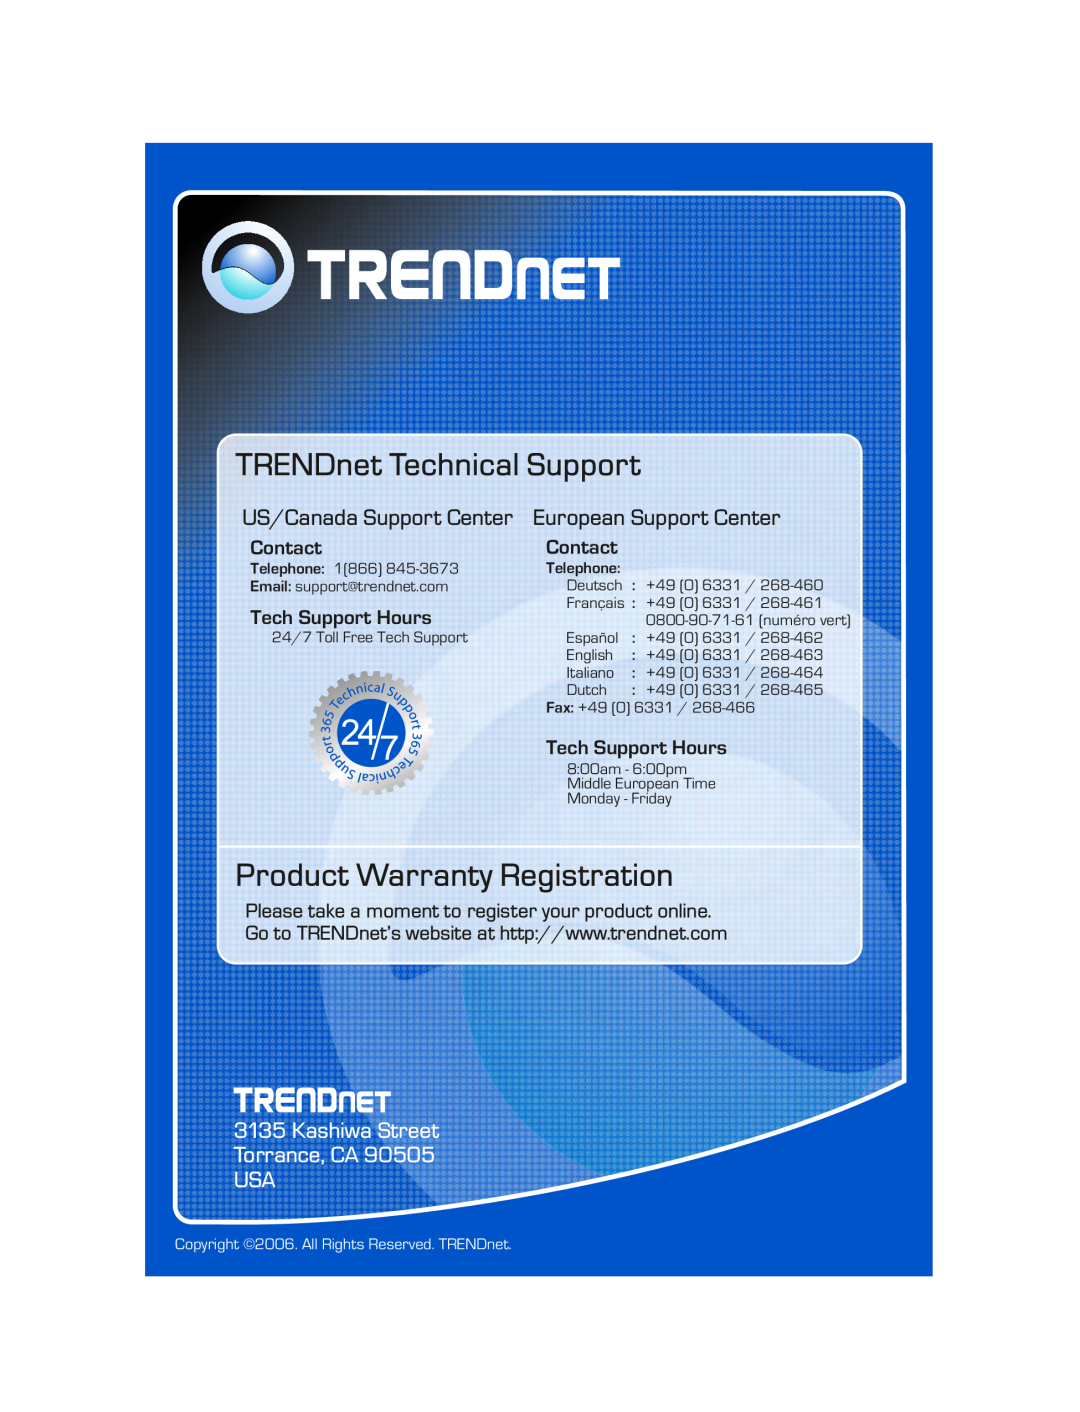 TRENDnet TEG-S081FI TRENDnet Technical Support, Product Warranty Registration, Kashiwa Street Torrance, CA USA, Contact 